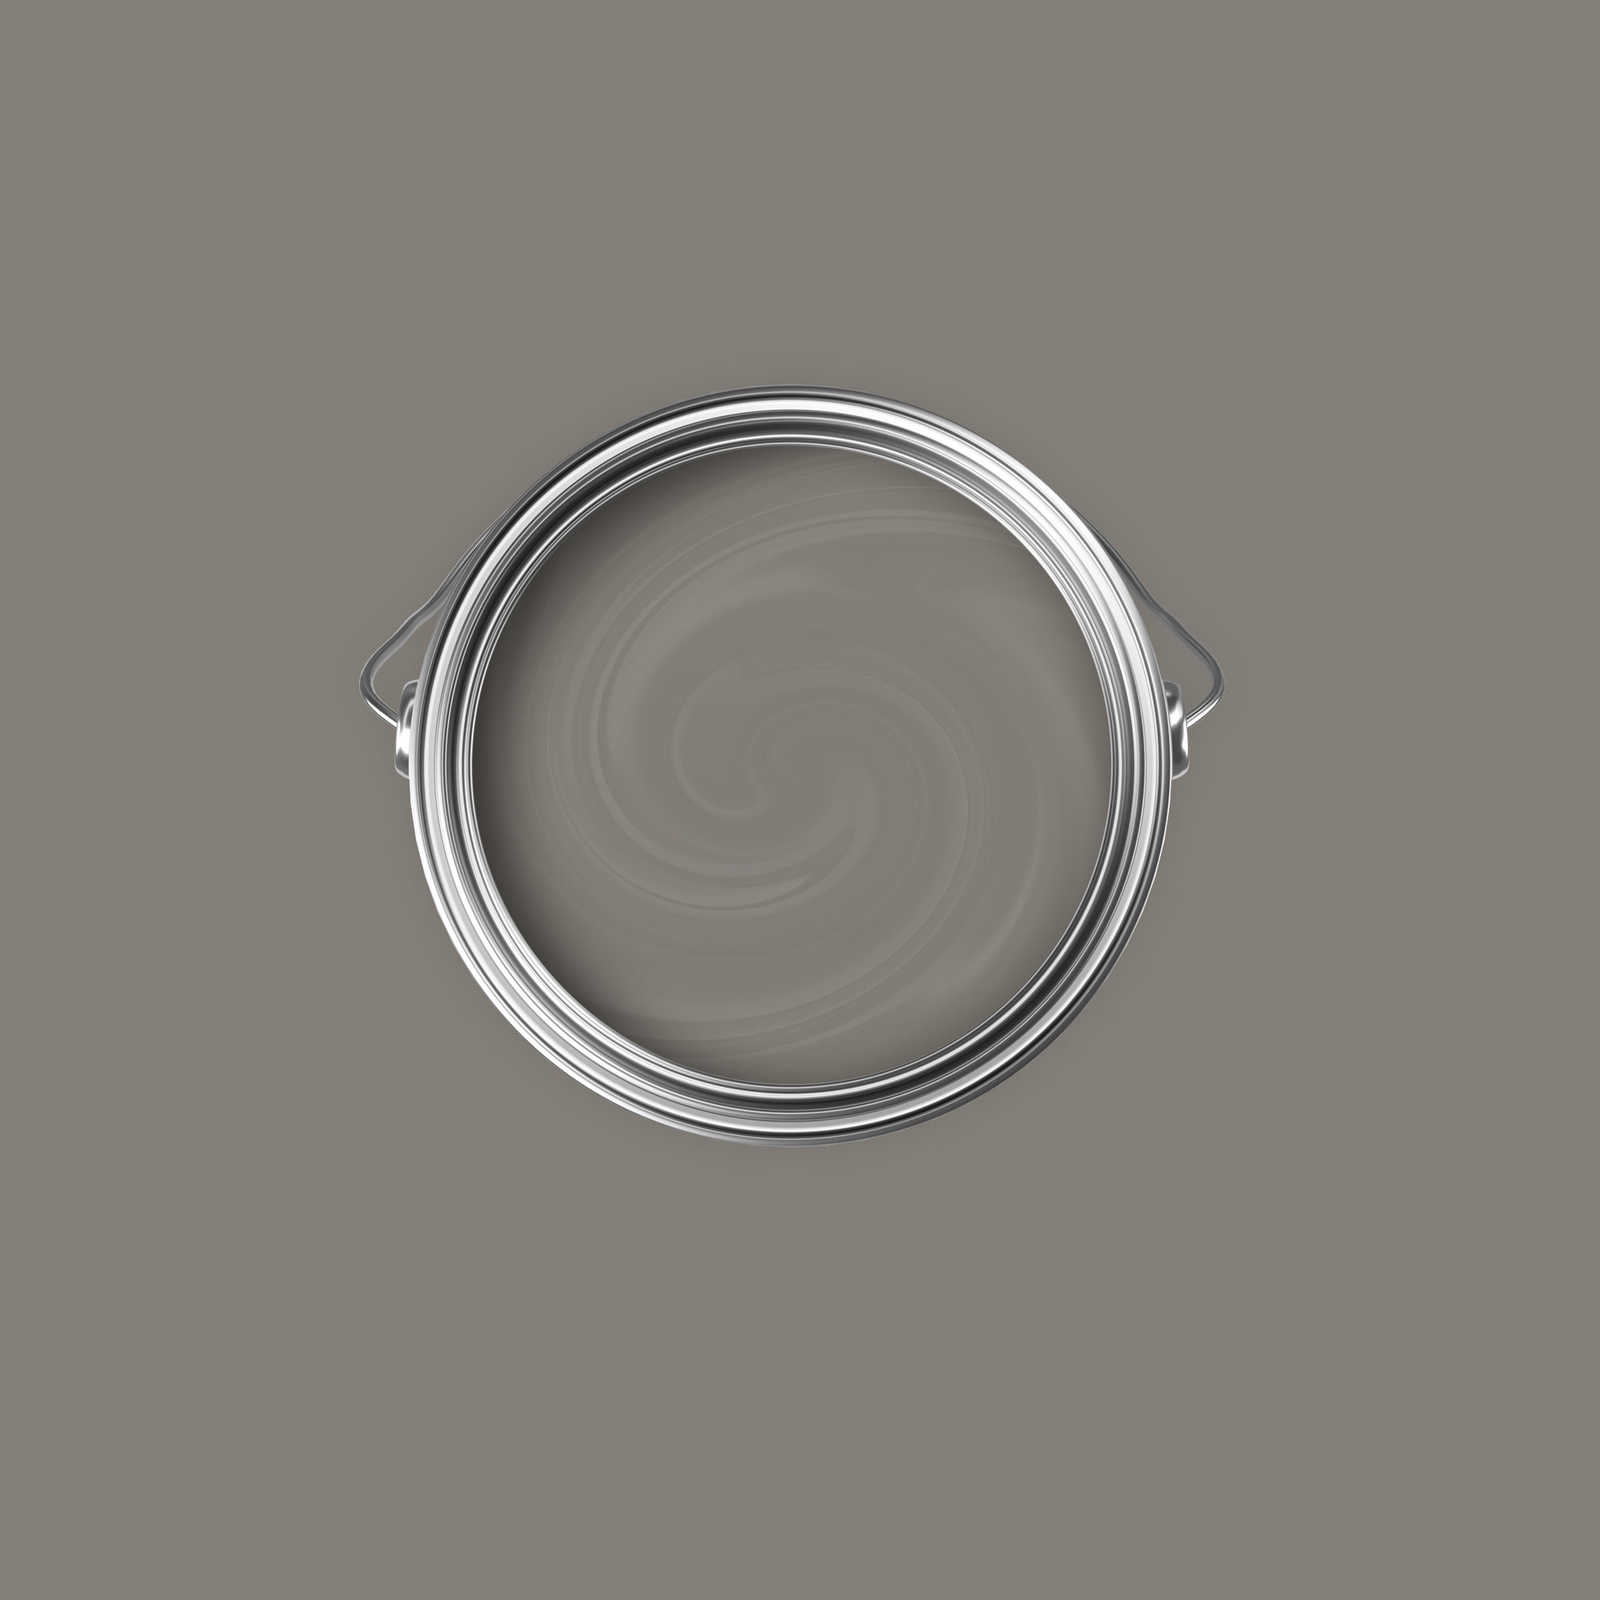             Premium Wall Paint neutral concrete grey »Creamy Grey« NW112 – 2,5 litre
        